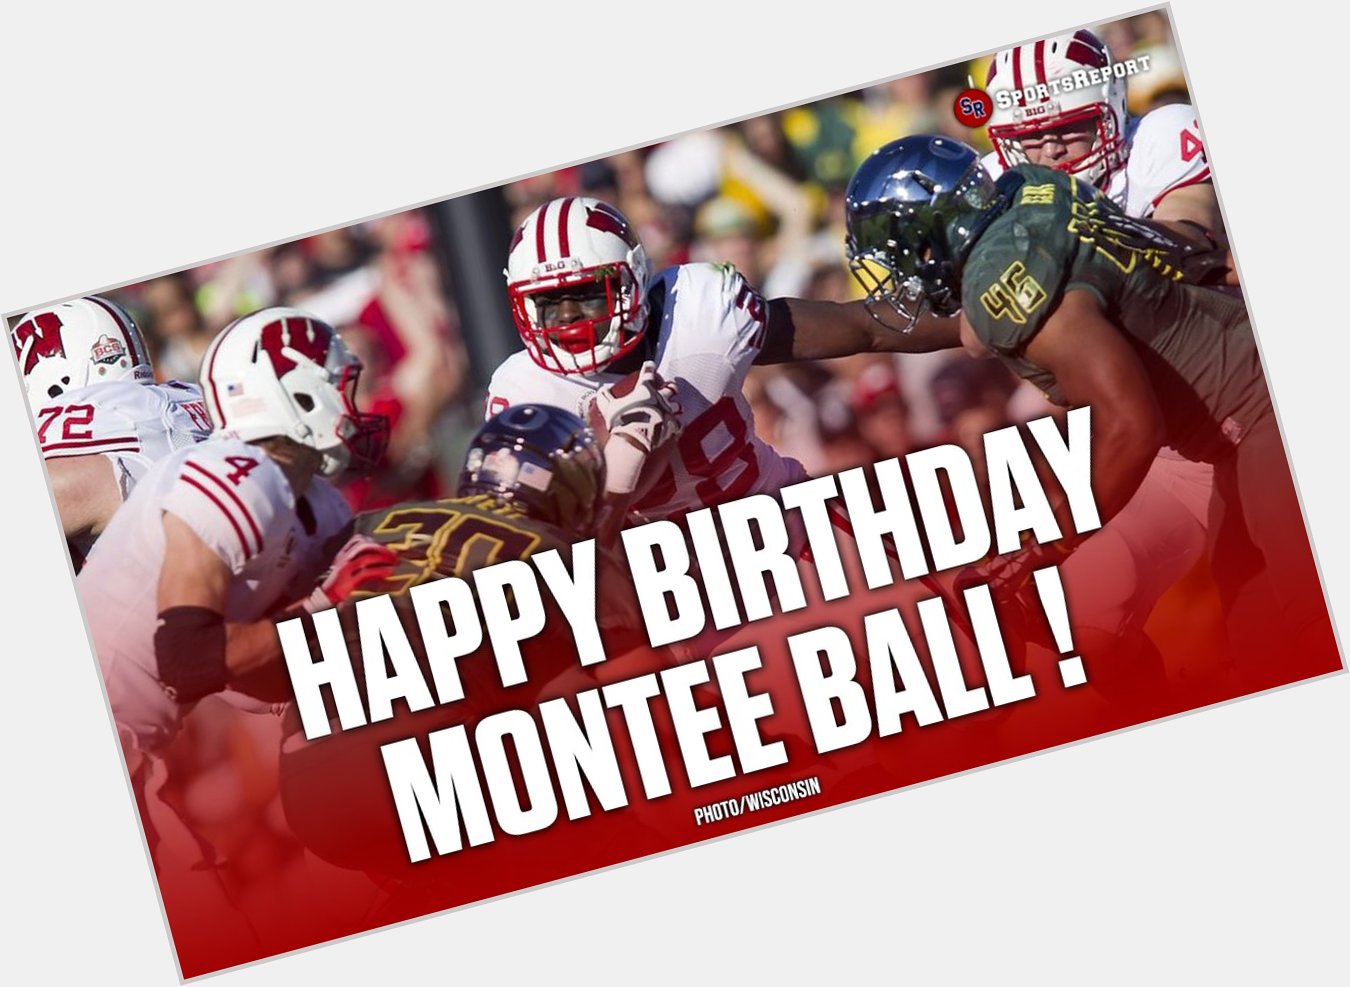  Fans, let\s wish legend Montee Ball a Happy Birthday! GO 